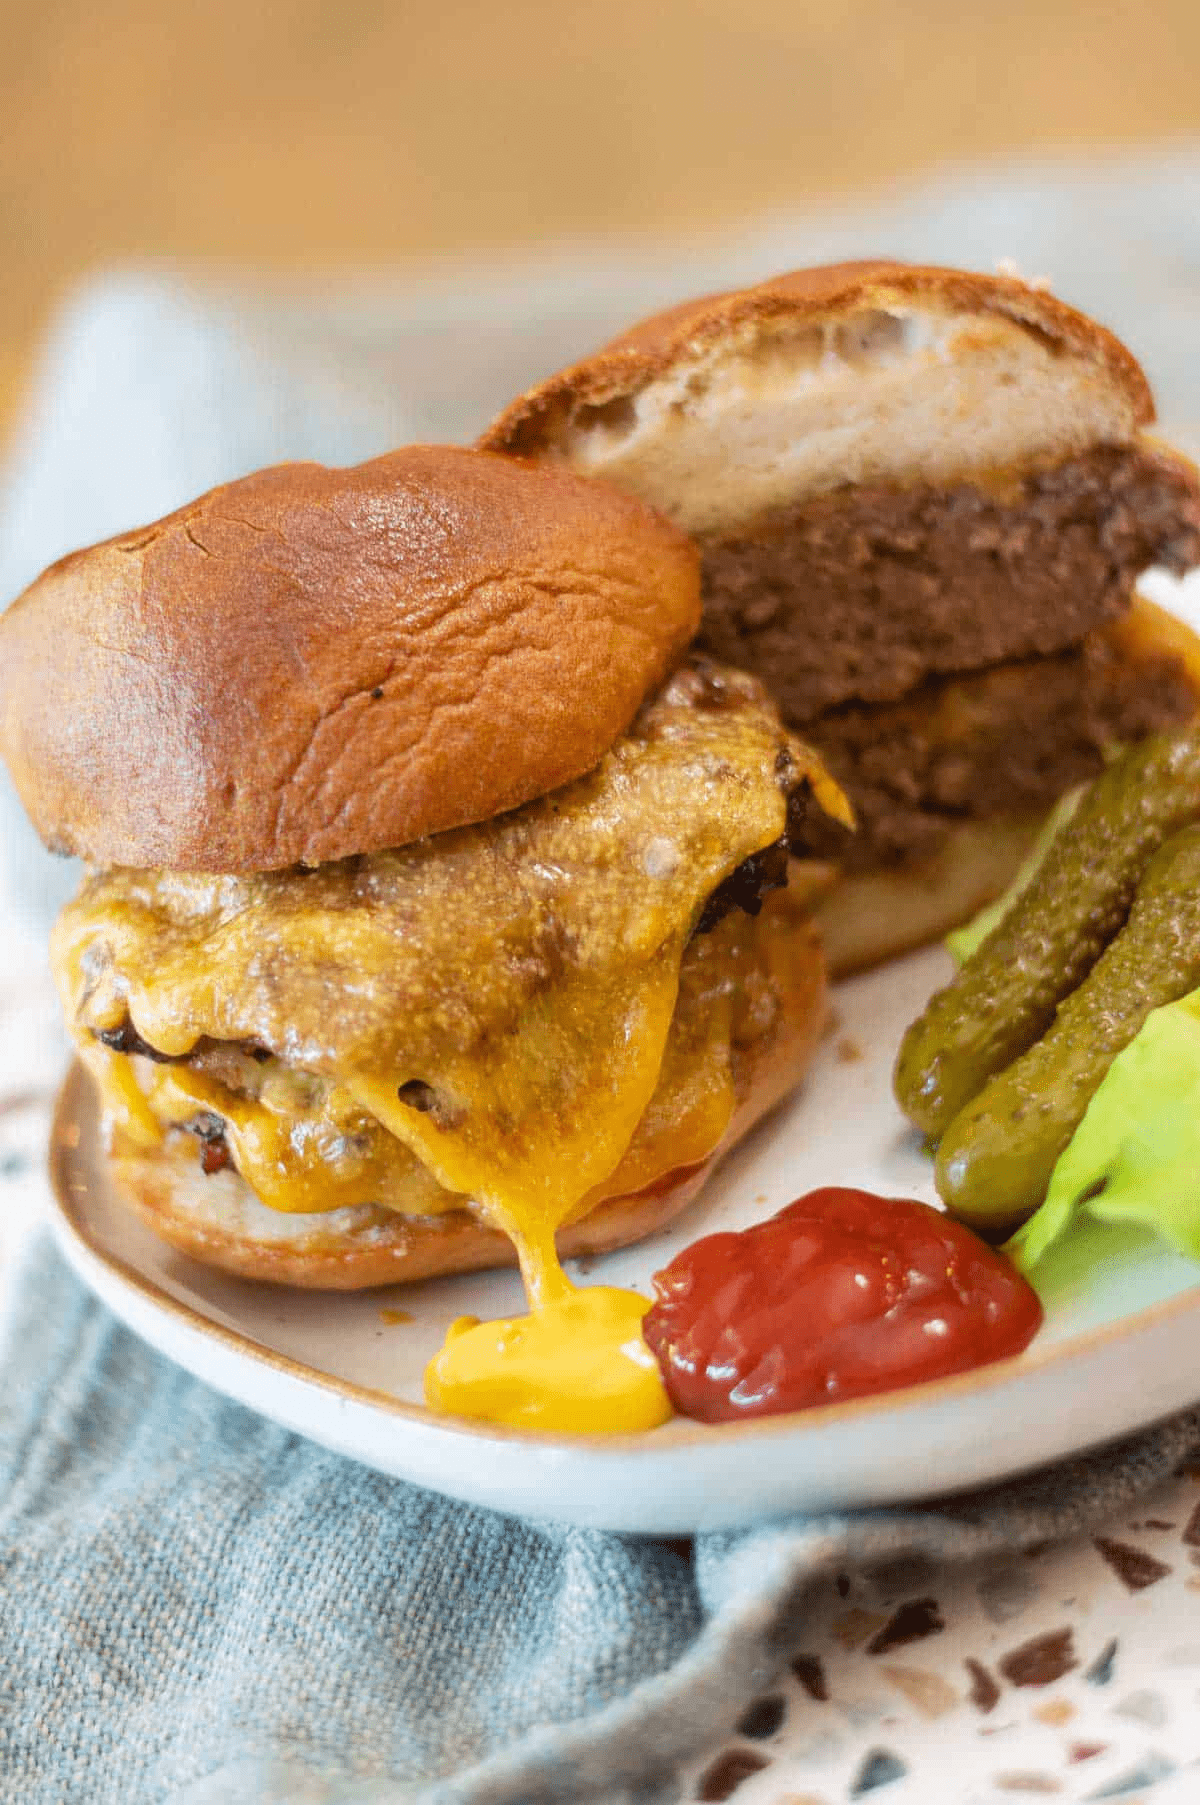 Gluten-free burger with gooey cheese